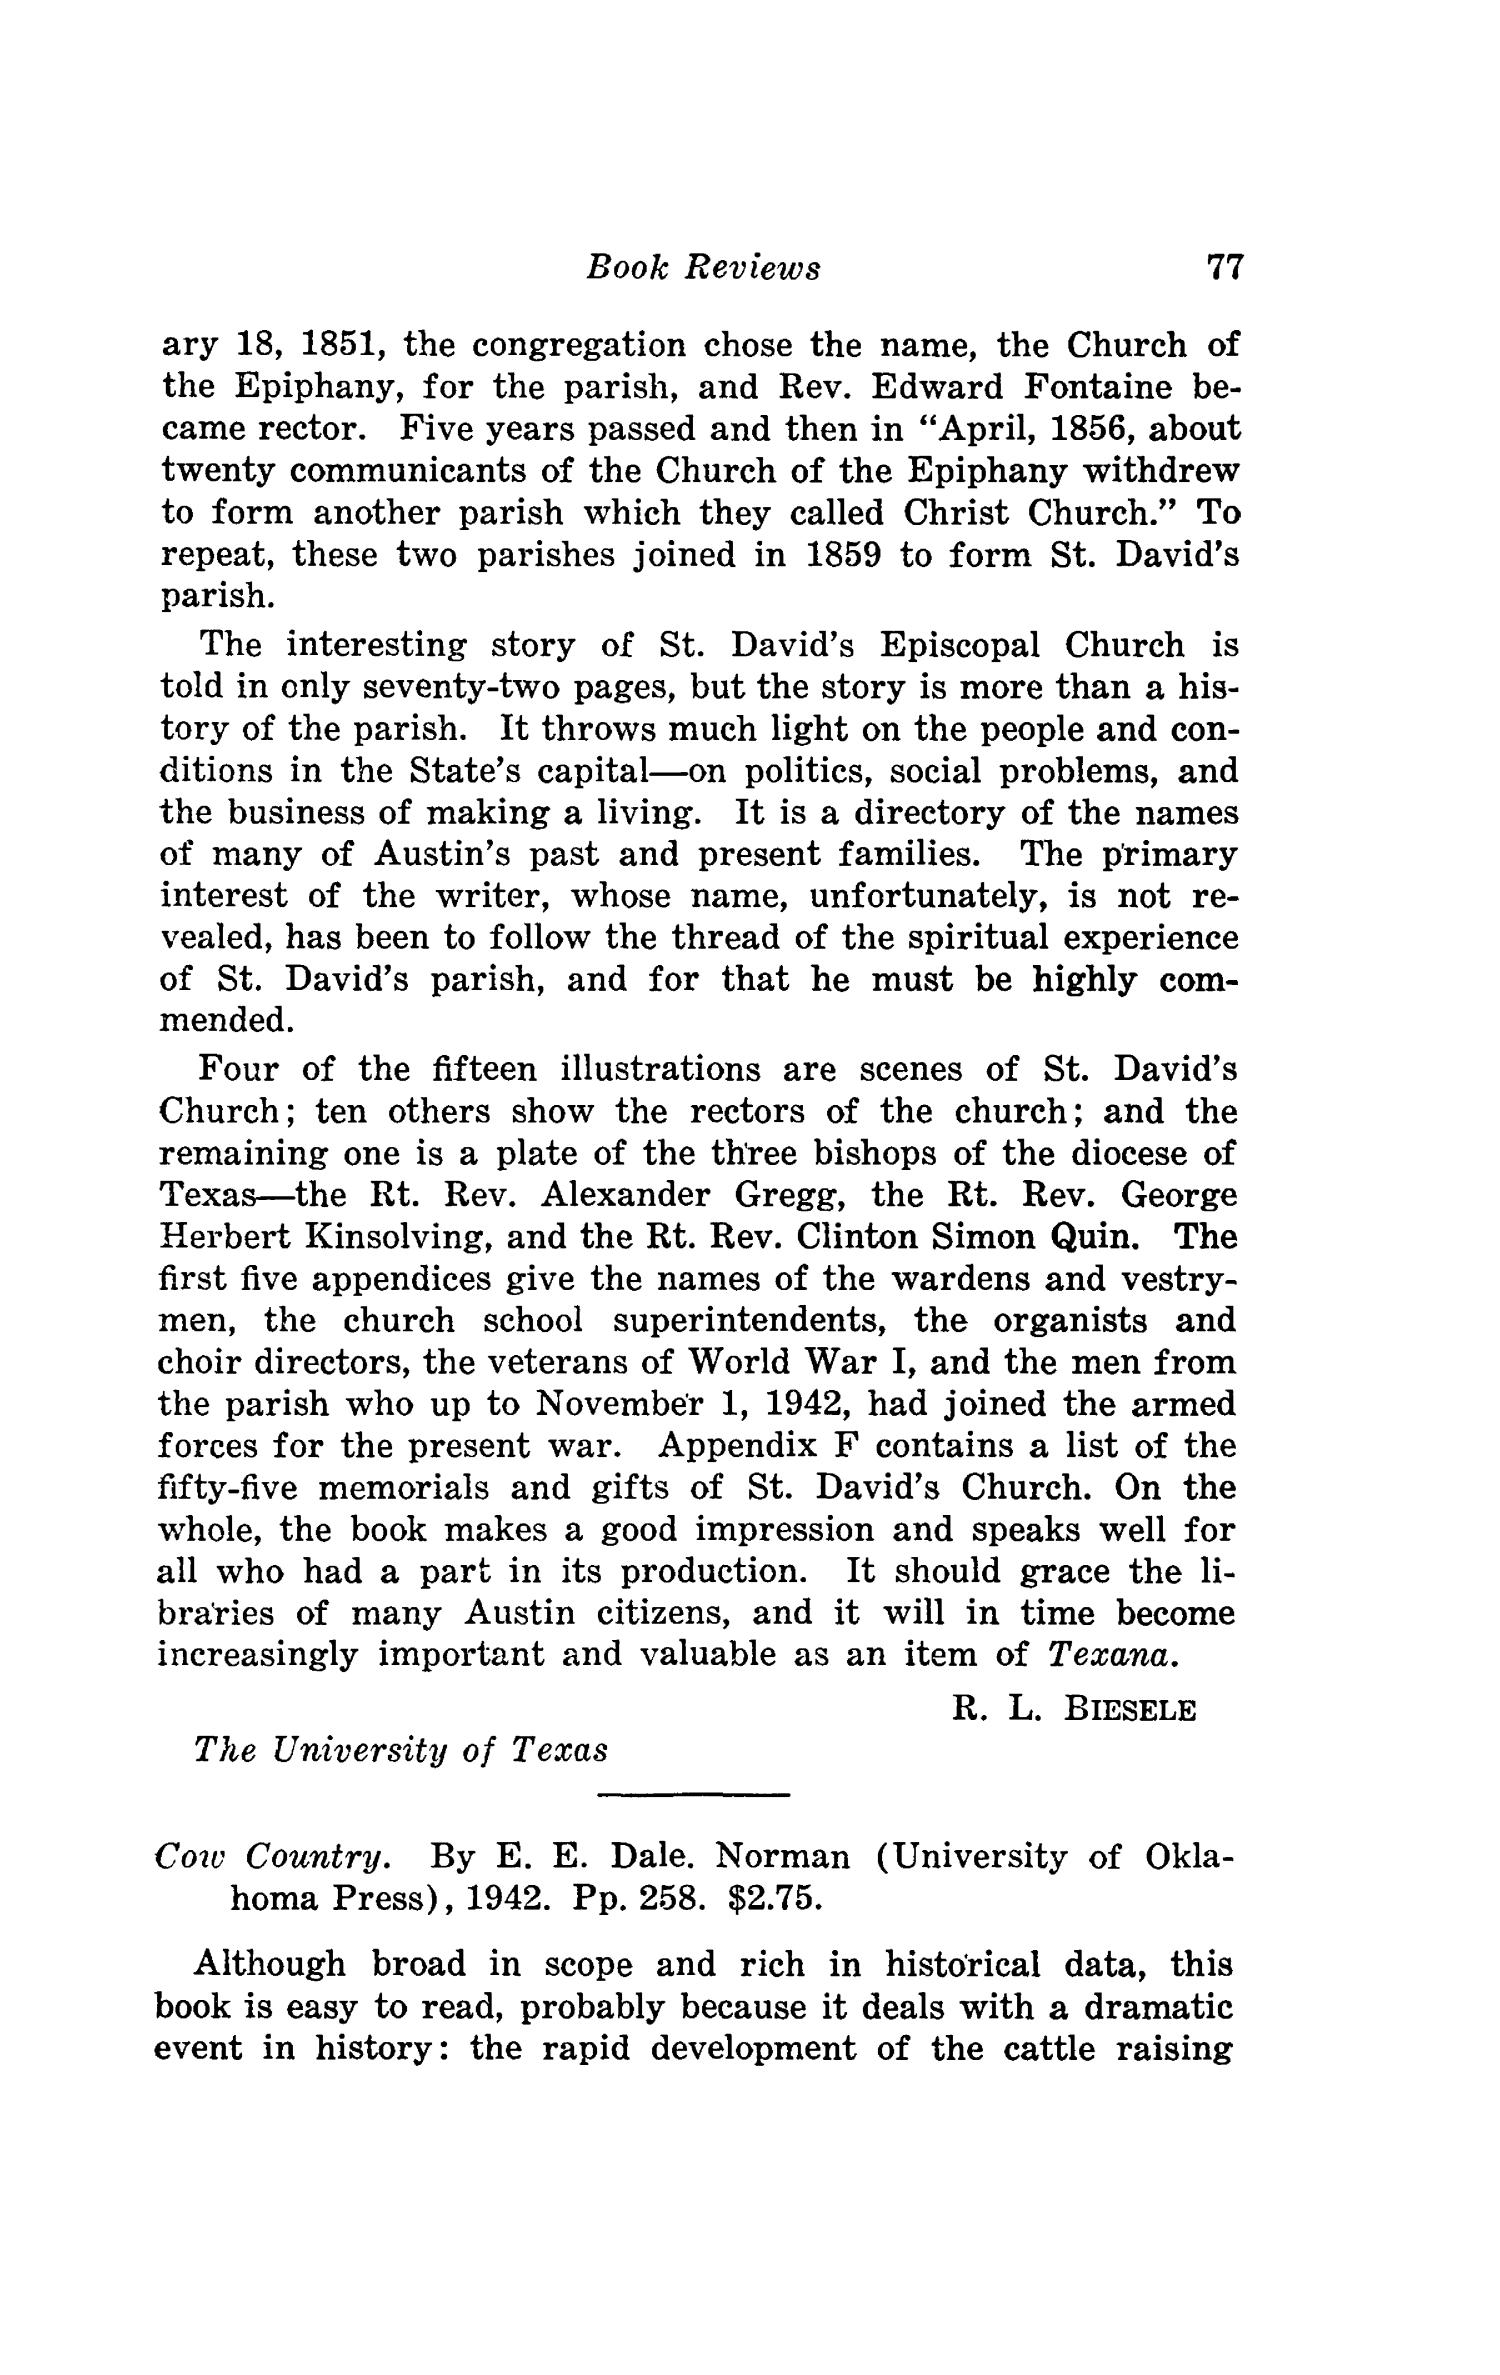 The Southwestern Historical Quarterly, Volume 47, July 1943 - April, 1944
                                                
                                                    77
                                                